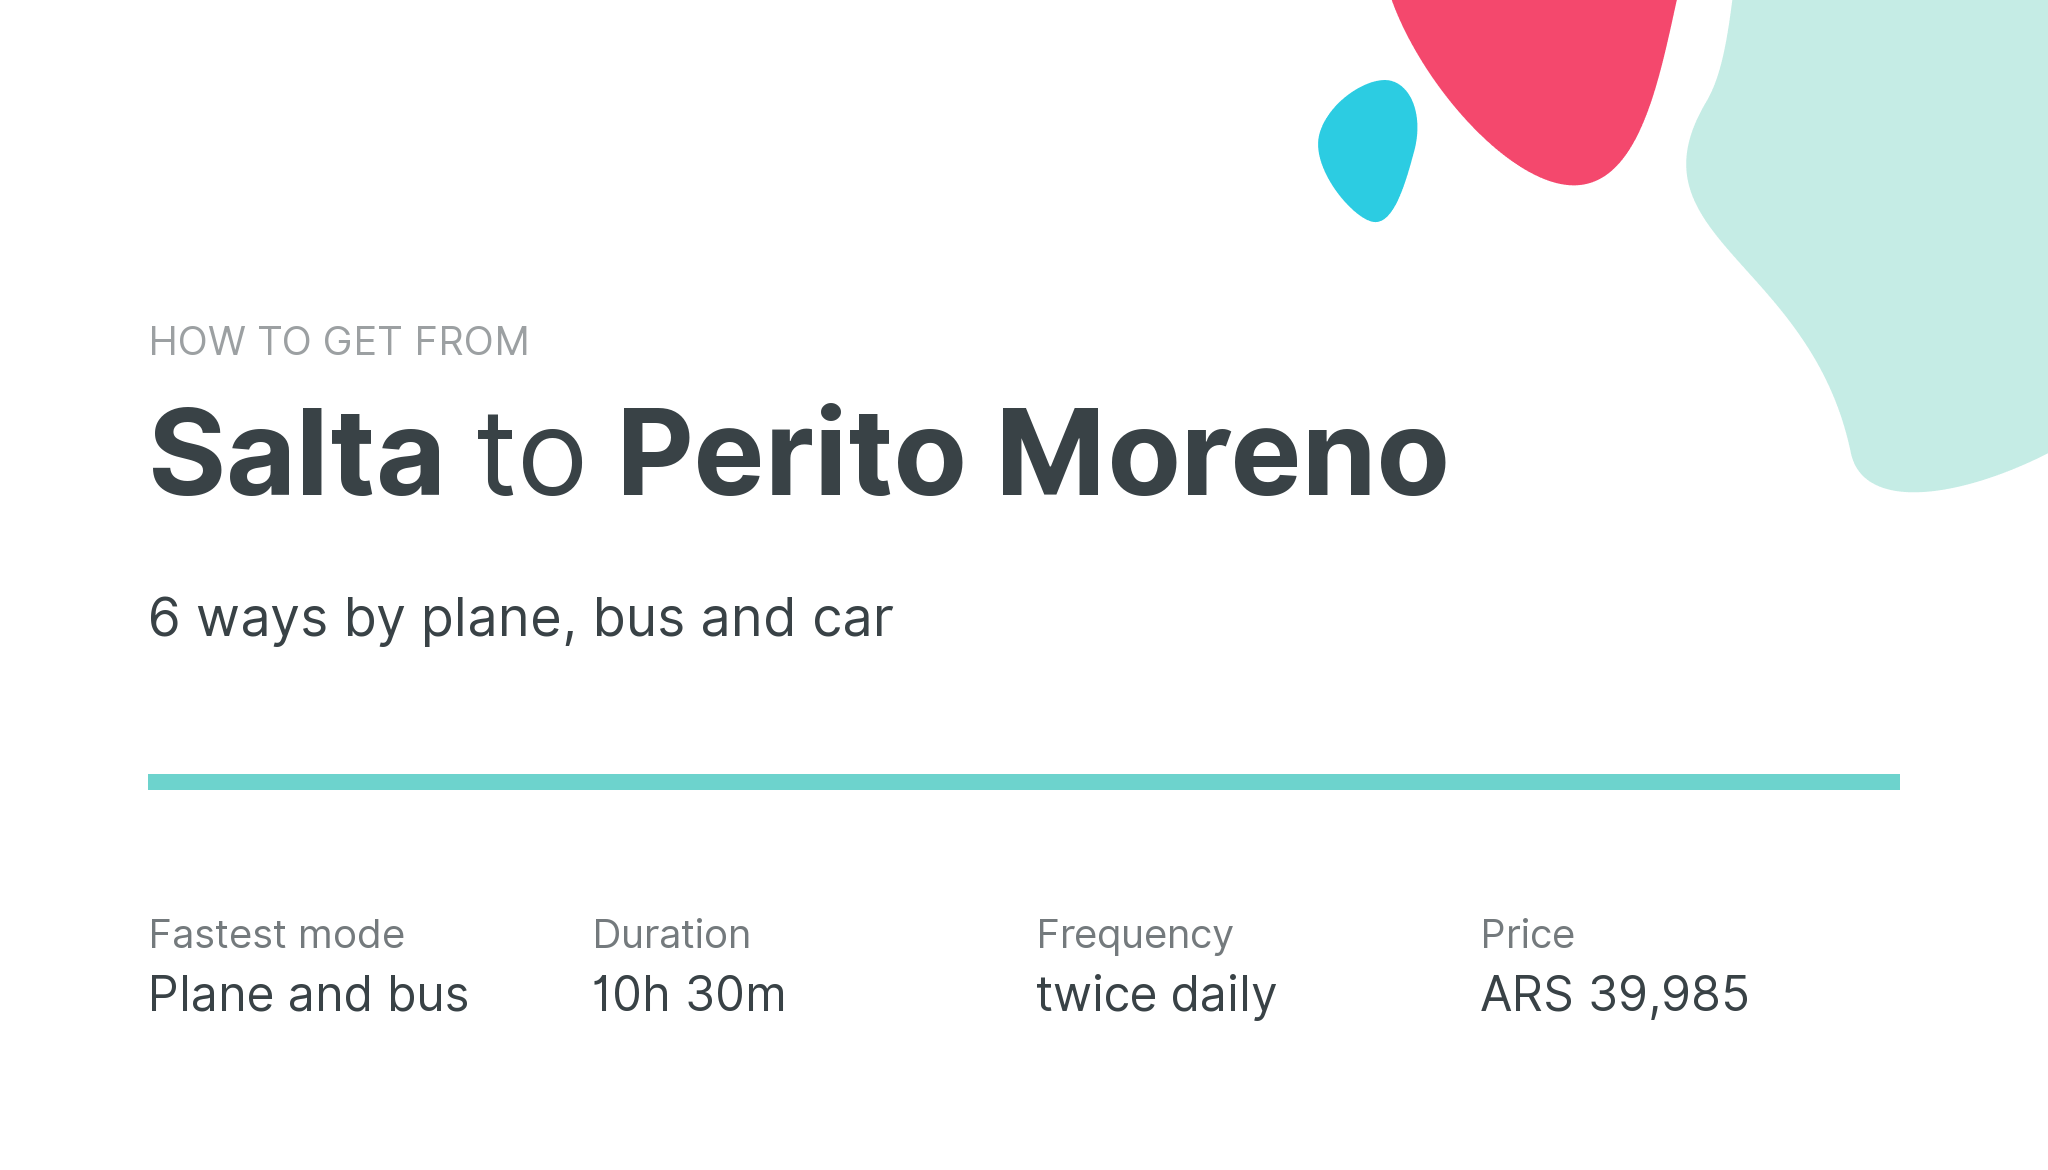 How do I get from Salta to Perito Moreno